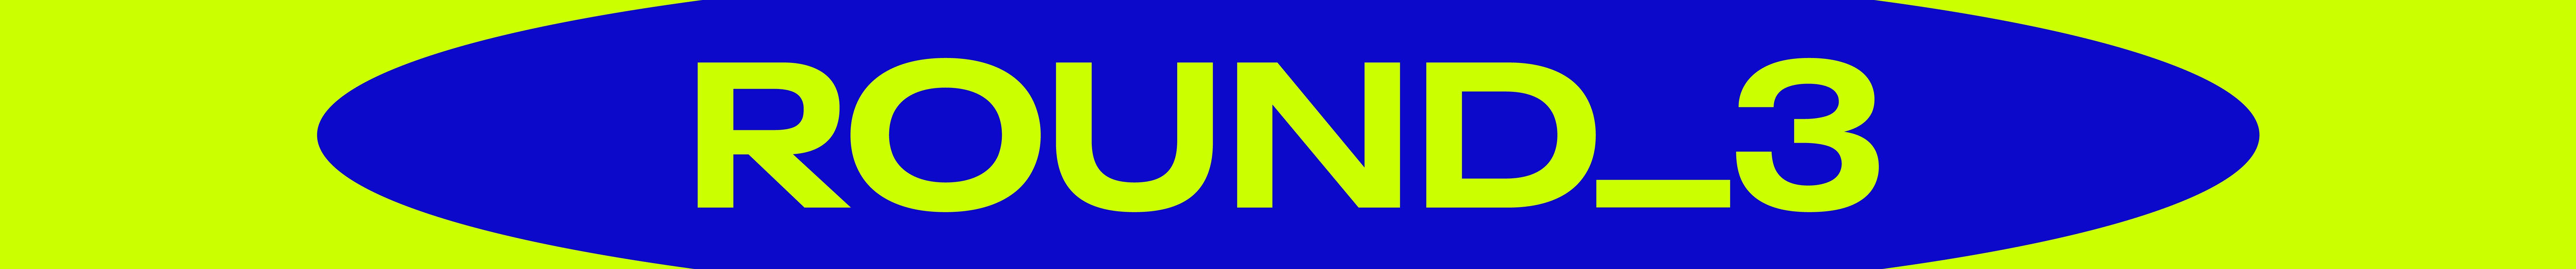 ROUND 3 DESIGN's profile banner